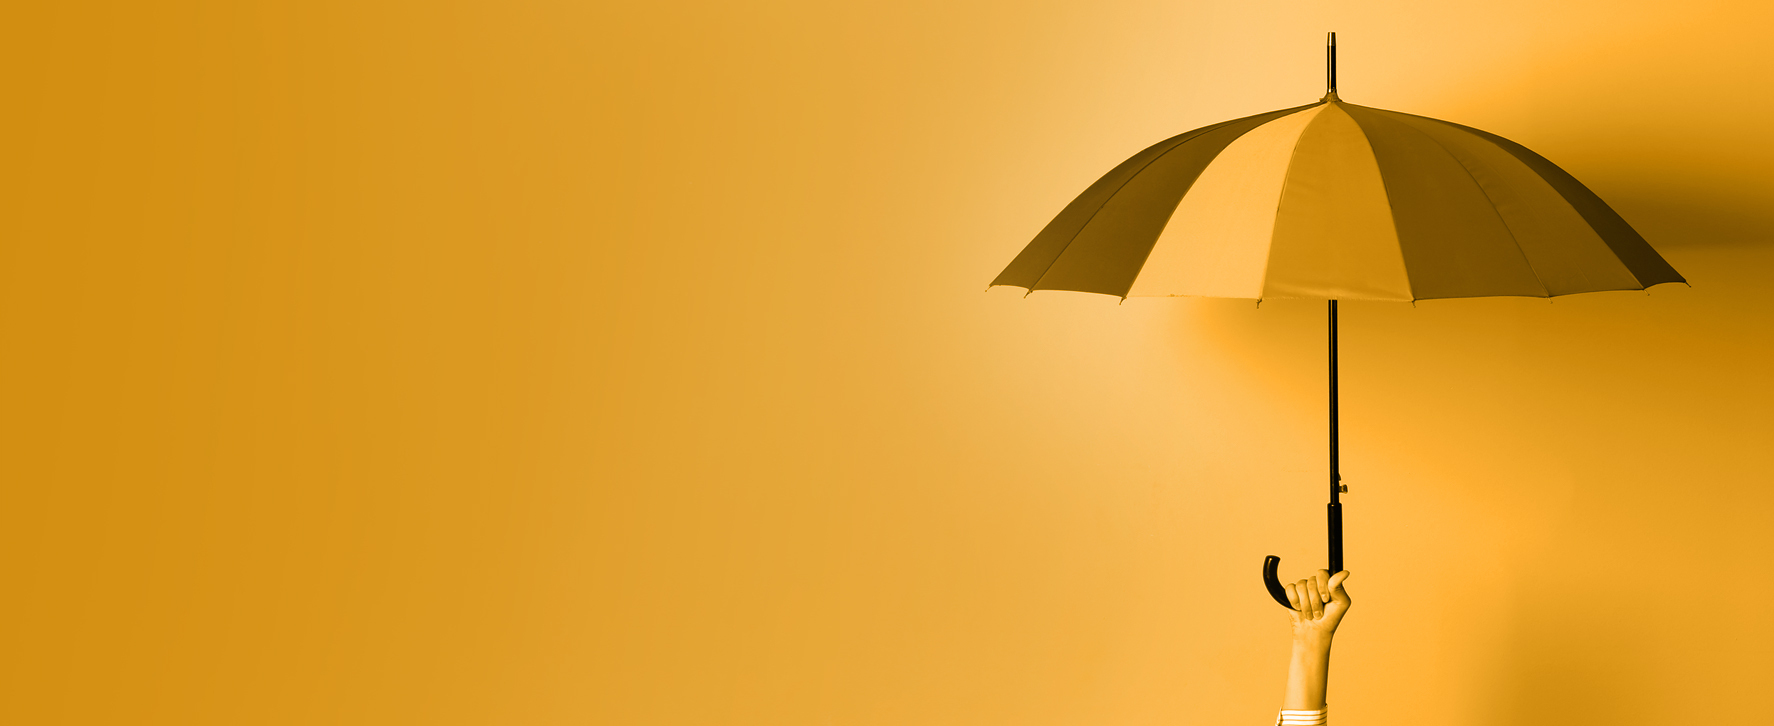 insurance-industry-ach-umbrella